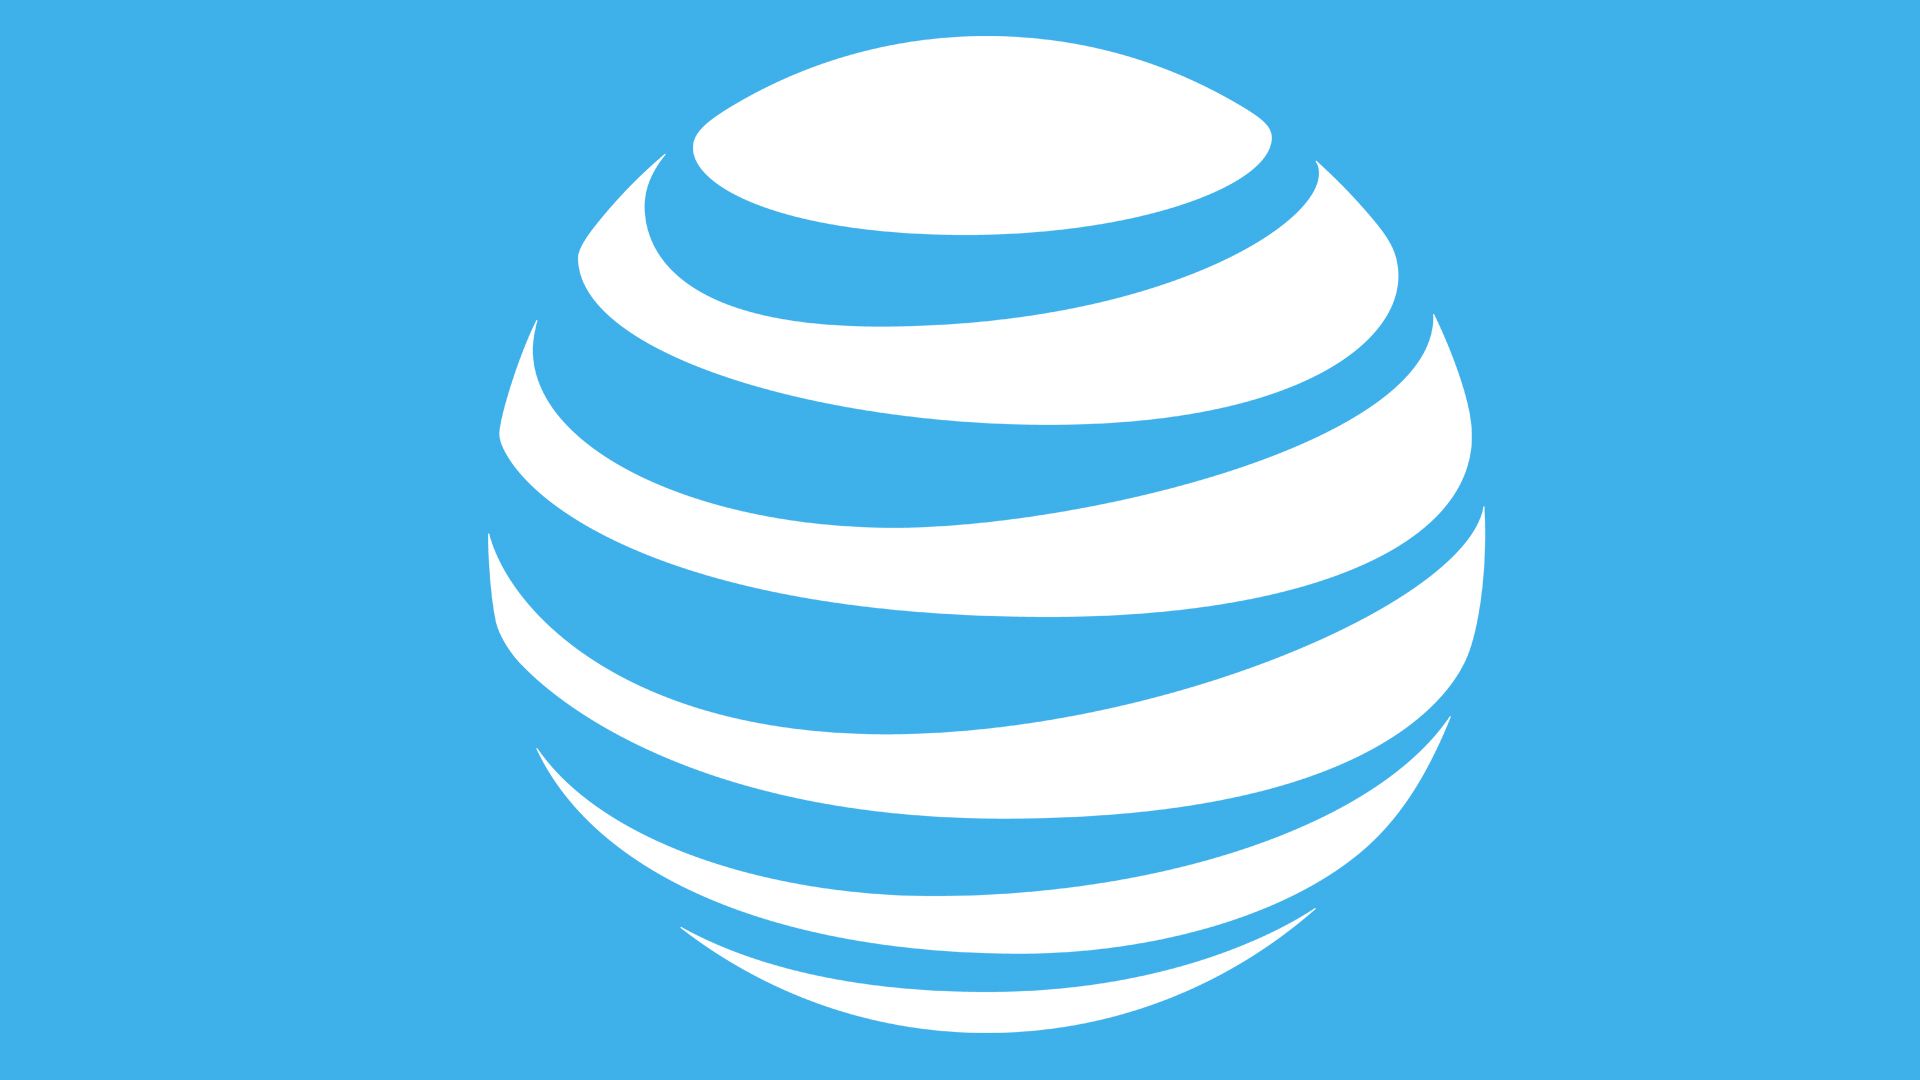 AT&T Globe Logo - AT&T Logo, AT&T Symbol Meaning, History and Evolution